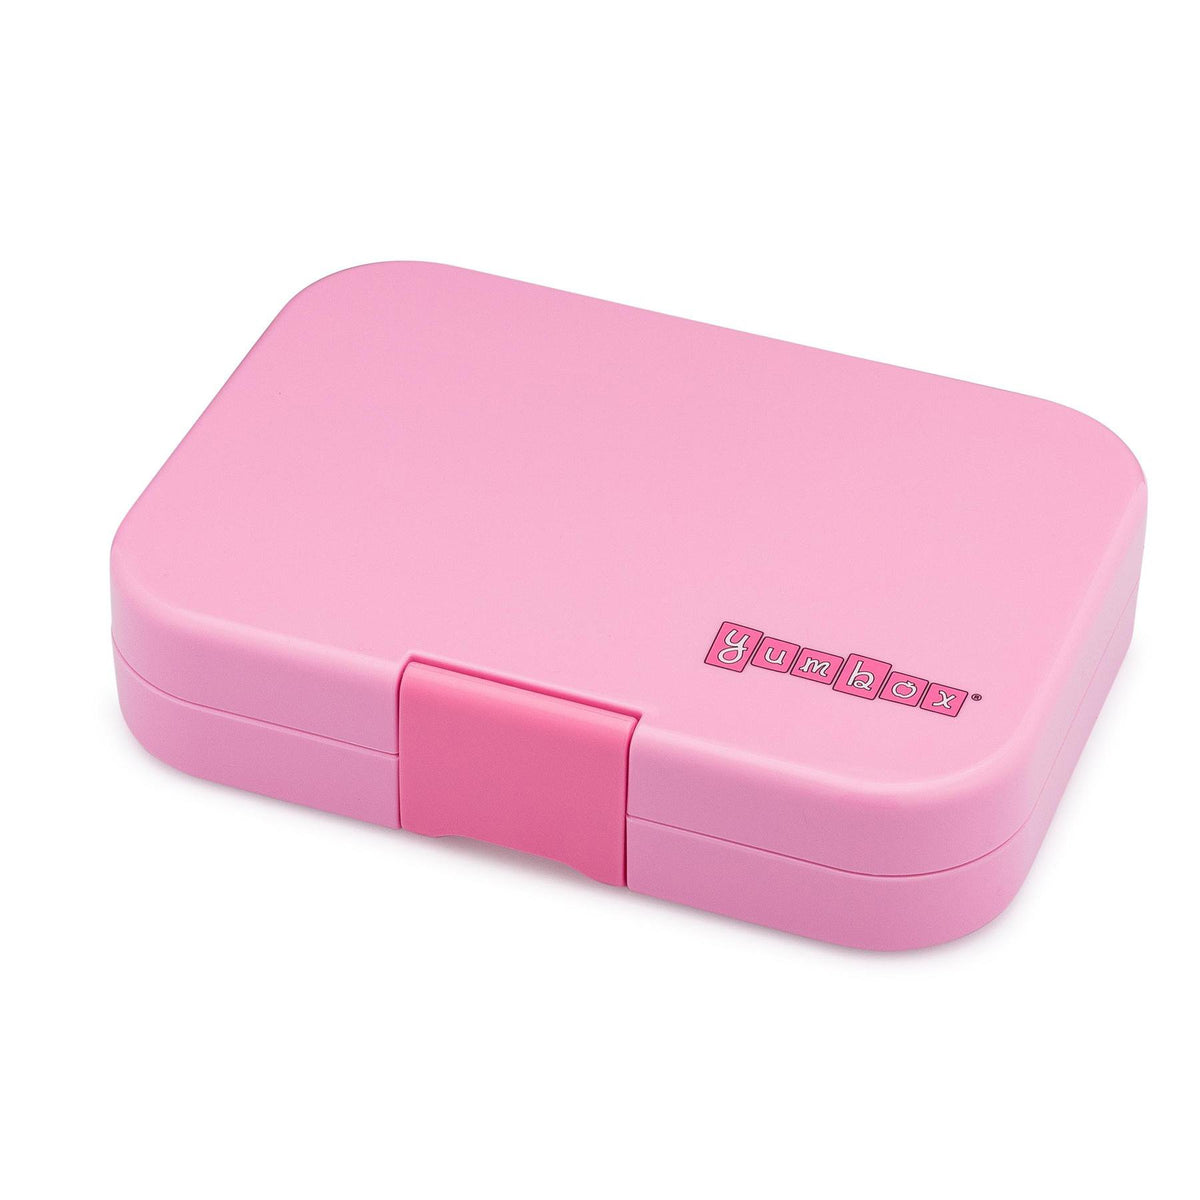 yumbox-panino-stardust-pink-4-compartment-lunch-box- (3)